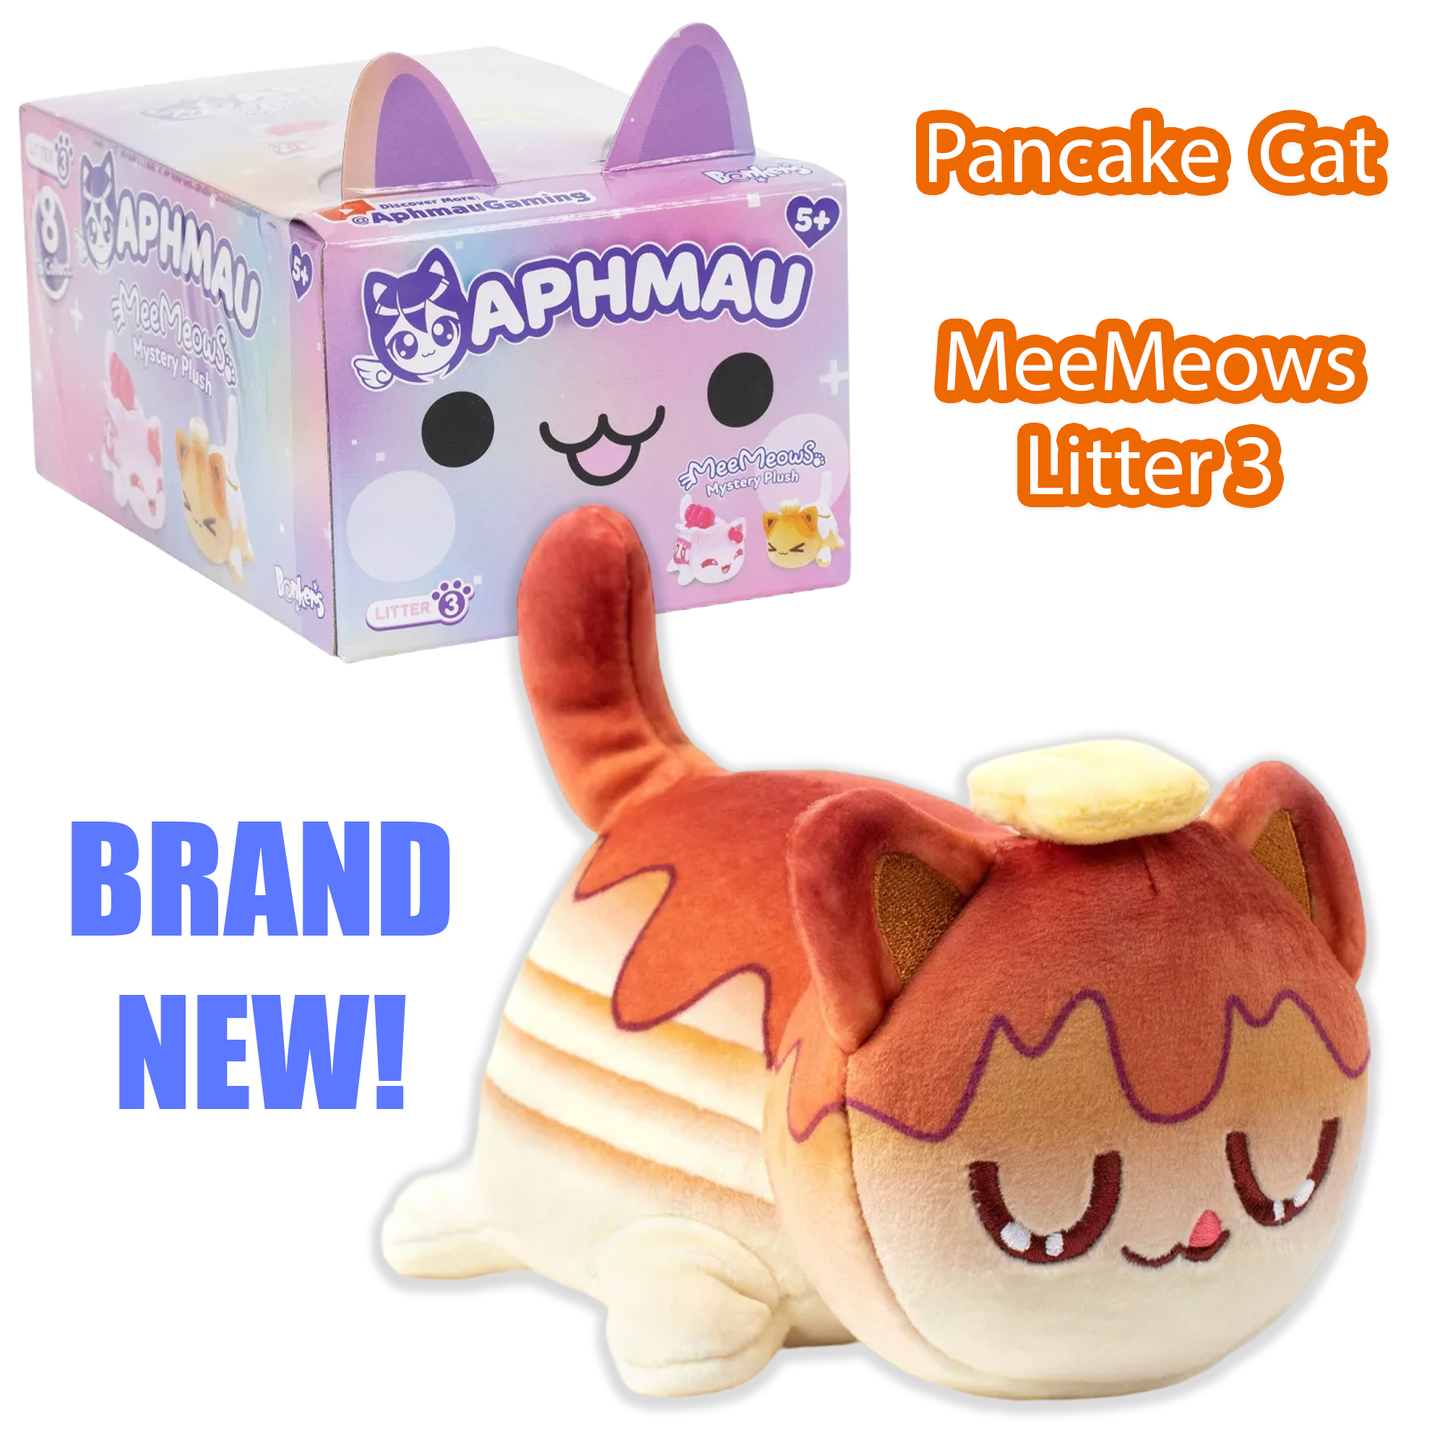 PANCAKE CAT - MeeMeows Litter 3 from Aphmau (BRAND NEW) RARE Kitty Plushie!